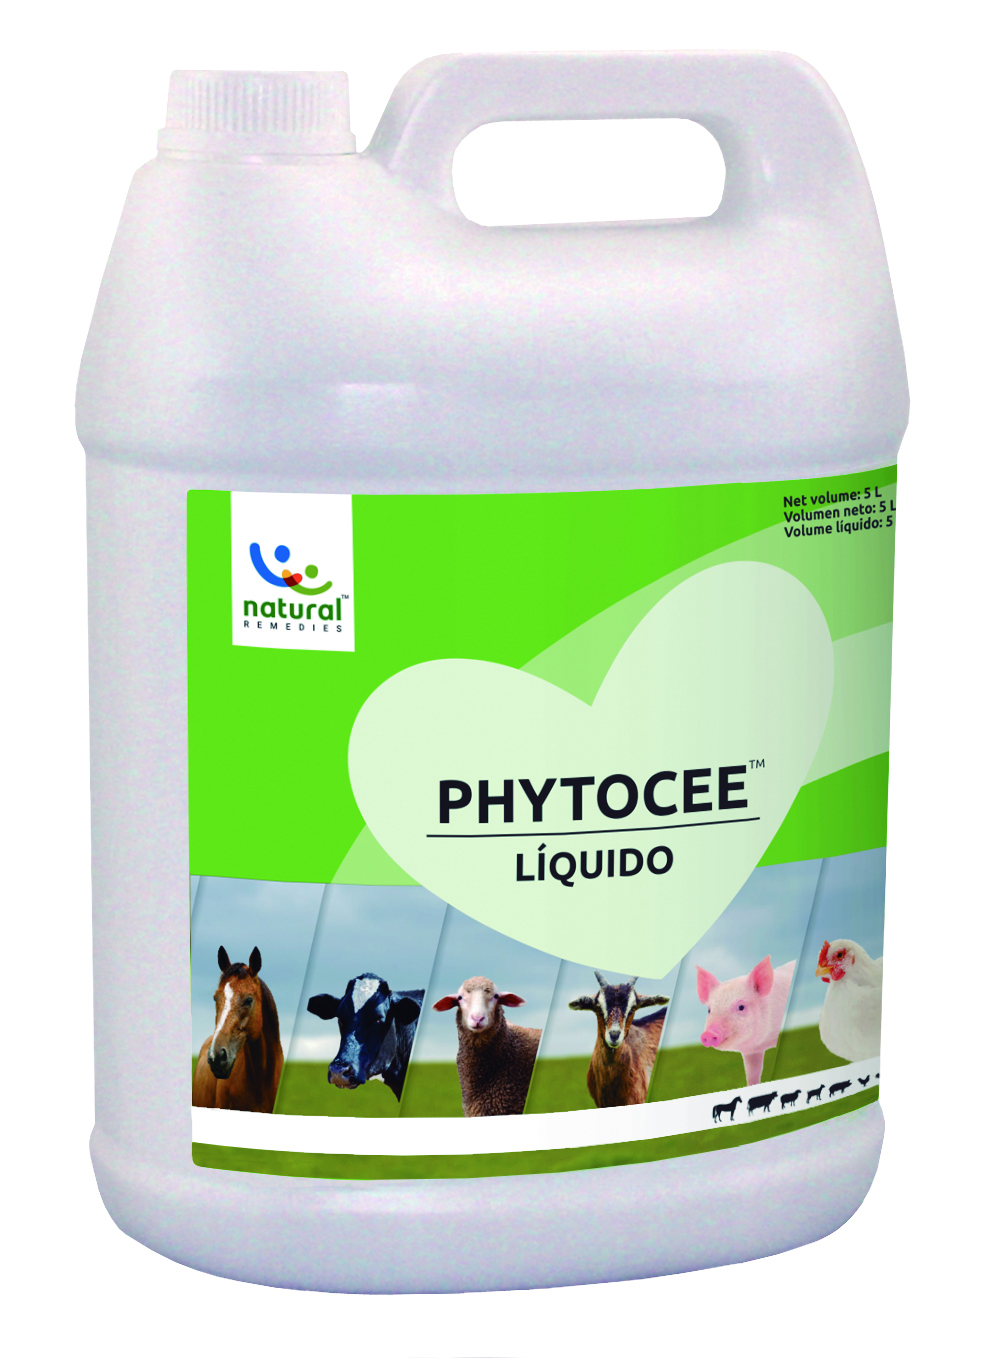 phytocee-liquido-5l_2021